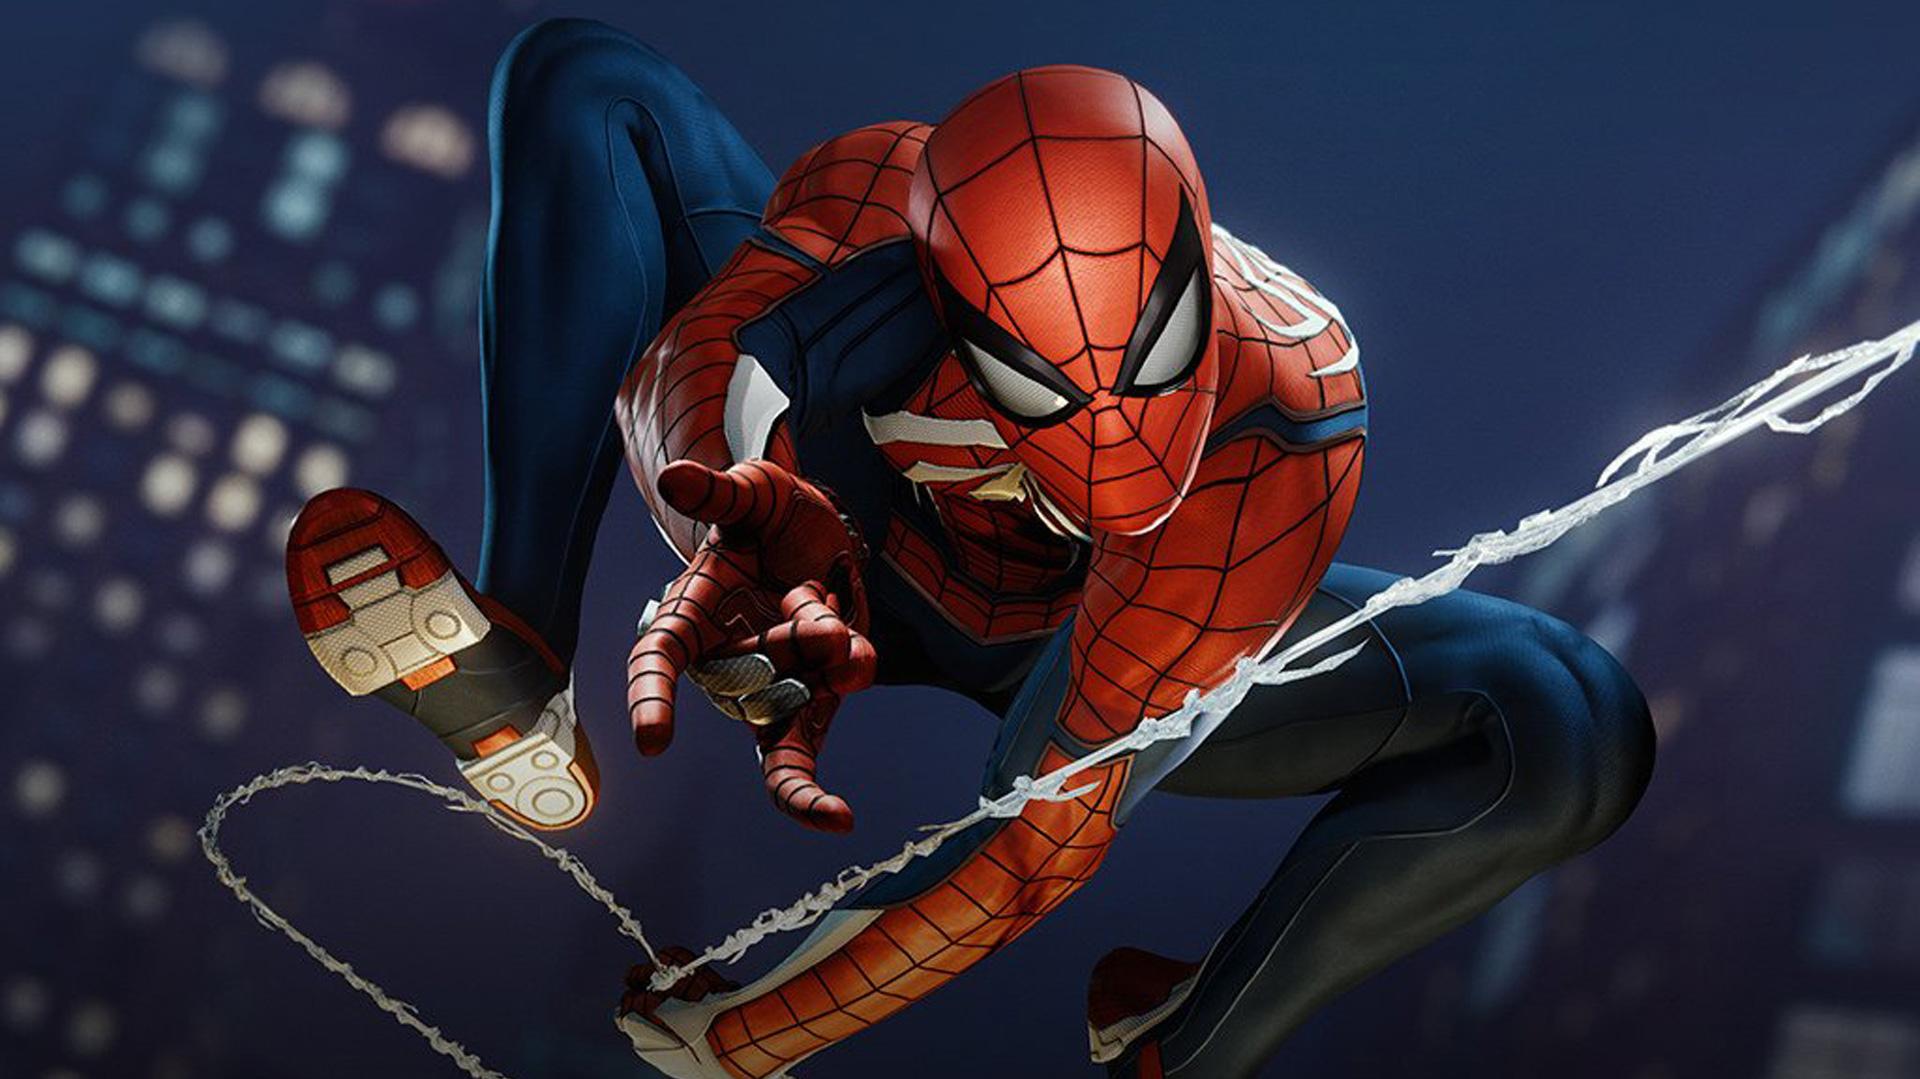 Spiderman City That Never Sleeps HD Games 4k Wallpaper Image